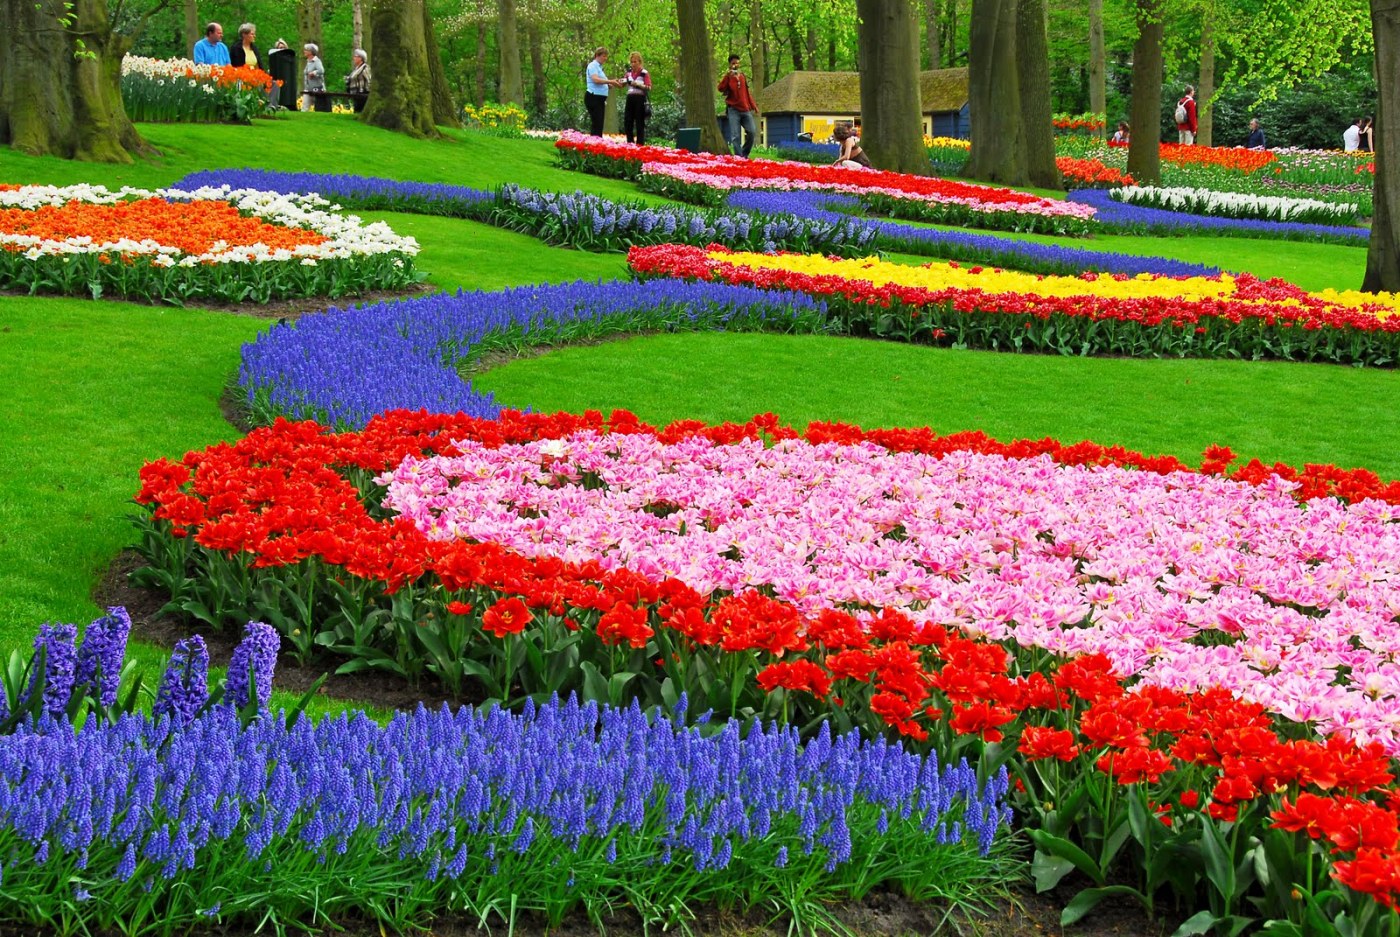 buat wallpaper,garden,botanical garden,flower,plant,tulip